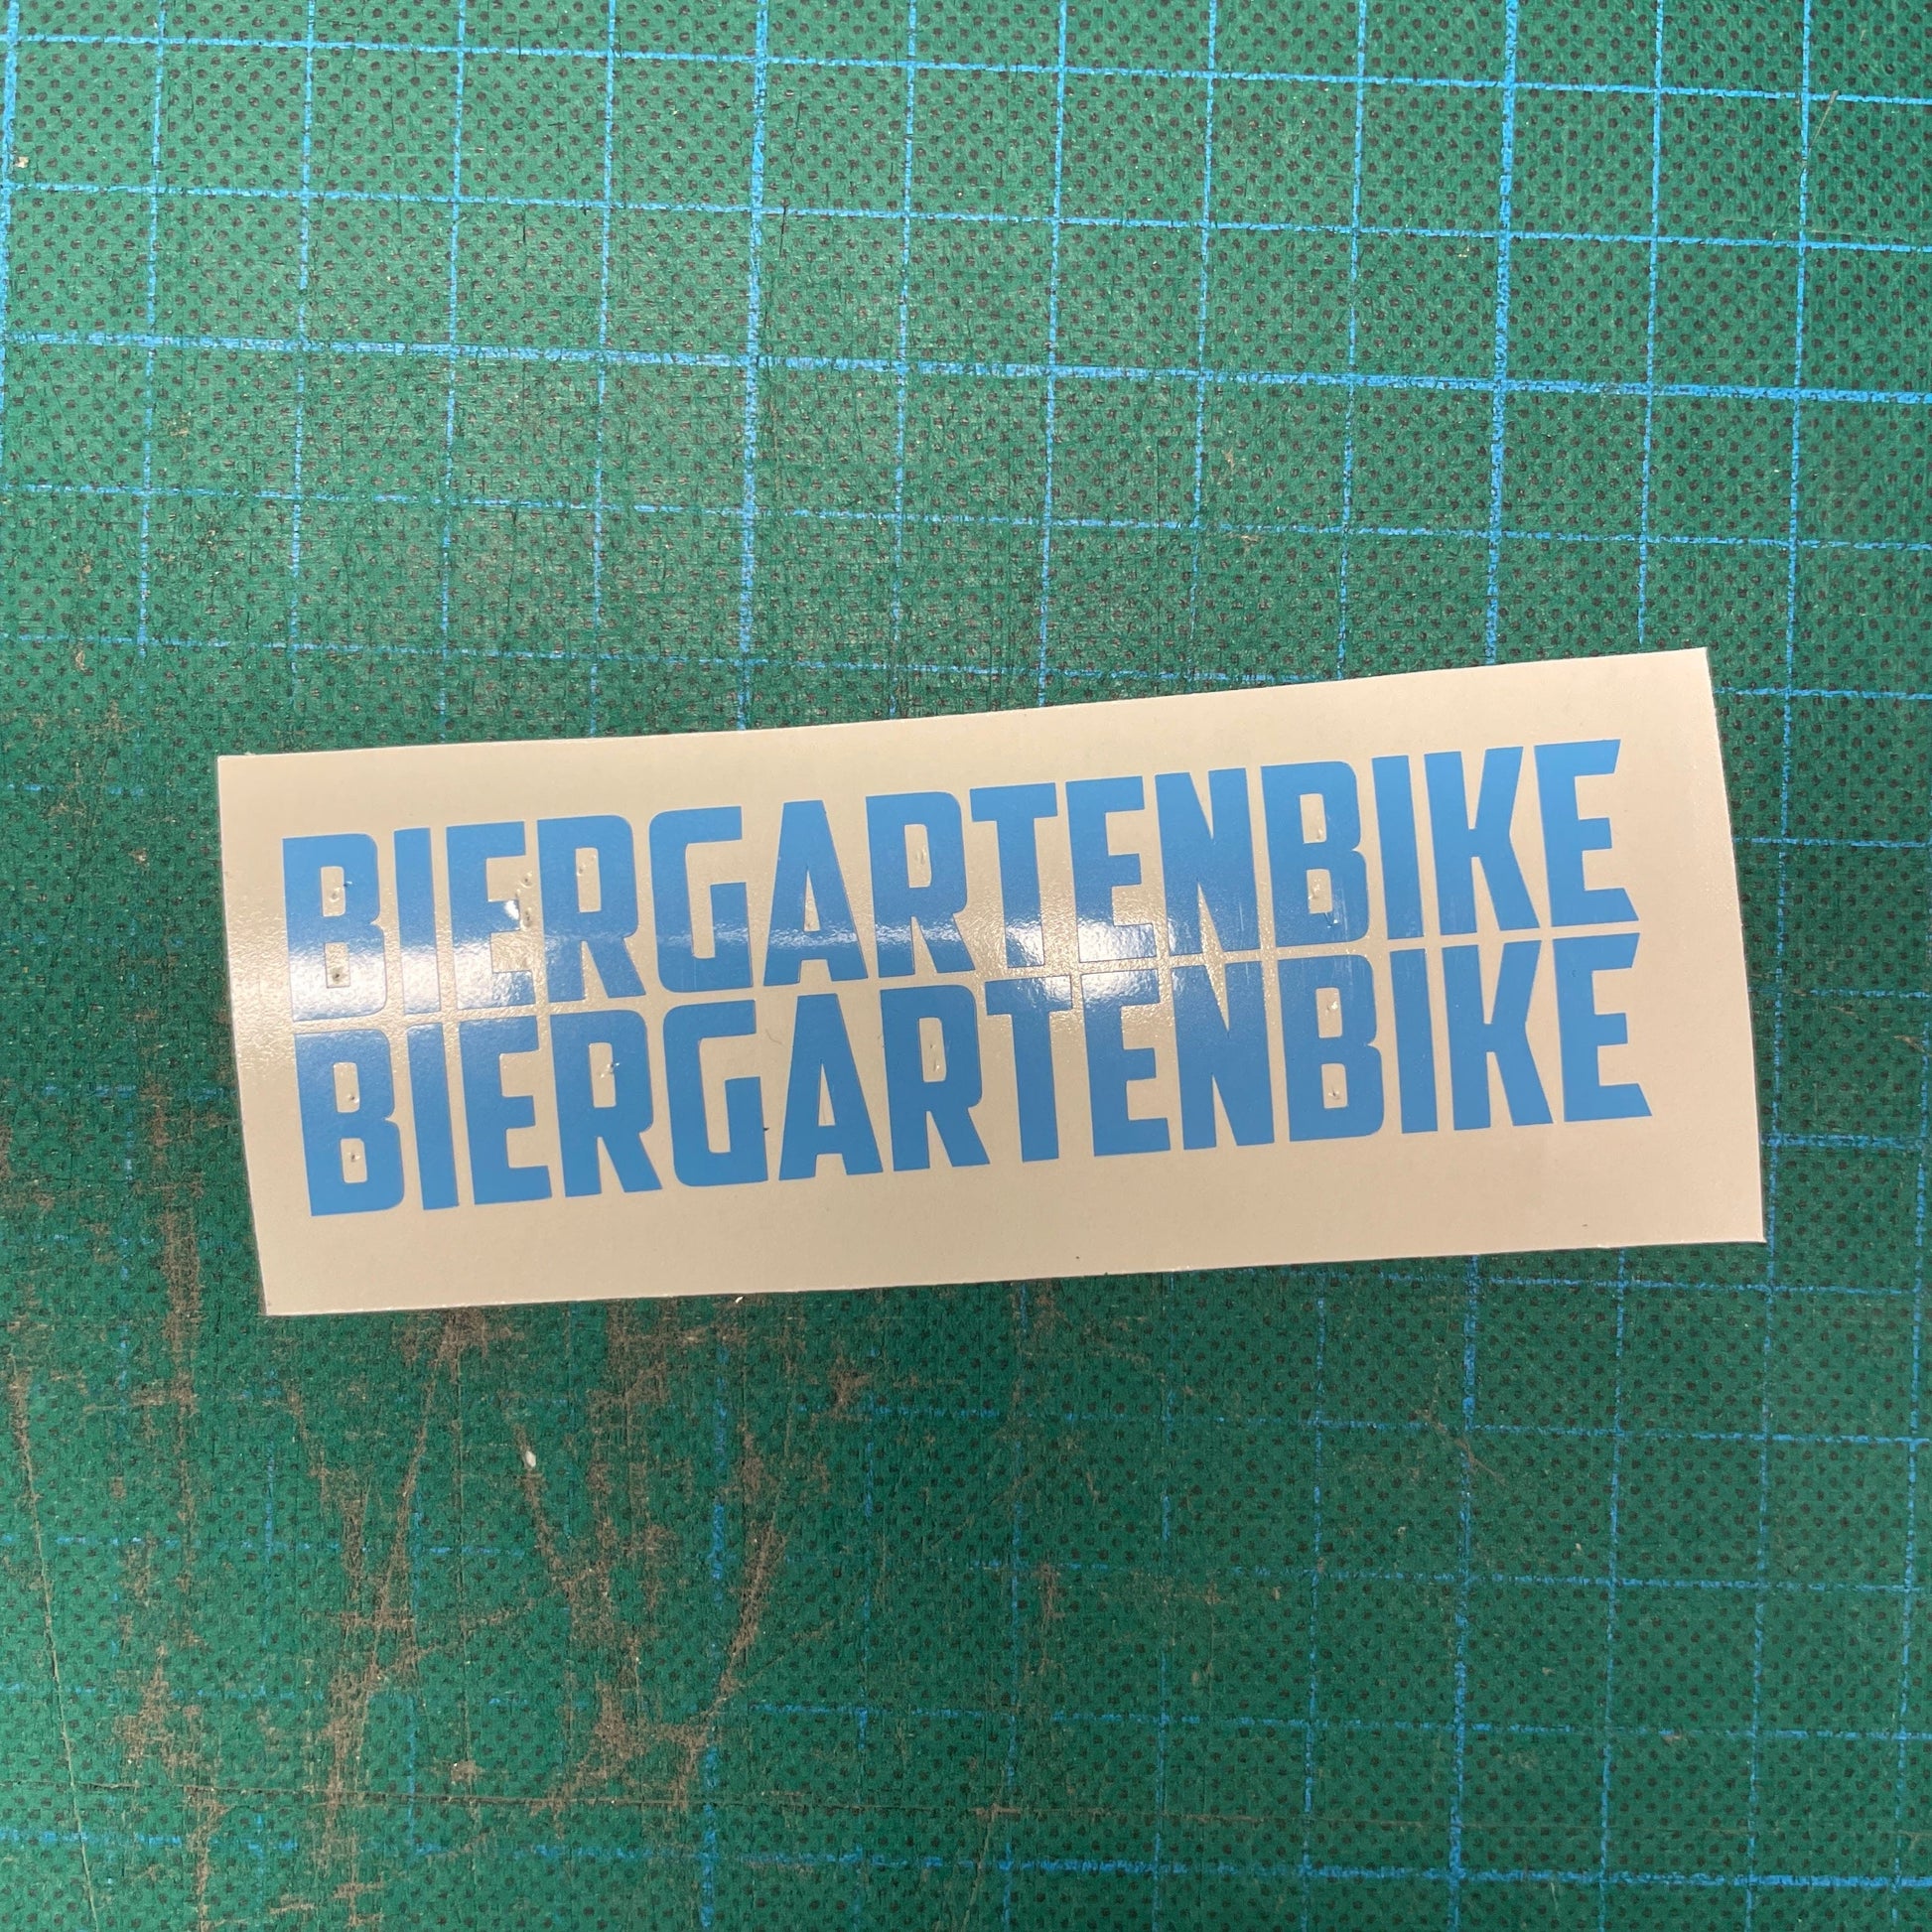 Sons of Battery - E-MTB Brand & Community Folien Lichtblau / Biergartenbike EISDIELENBIKE / BIERGARTENBIKE E-Bike-Community